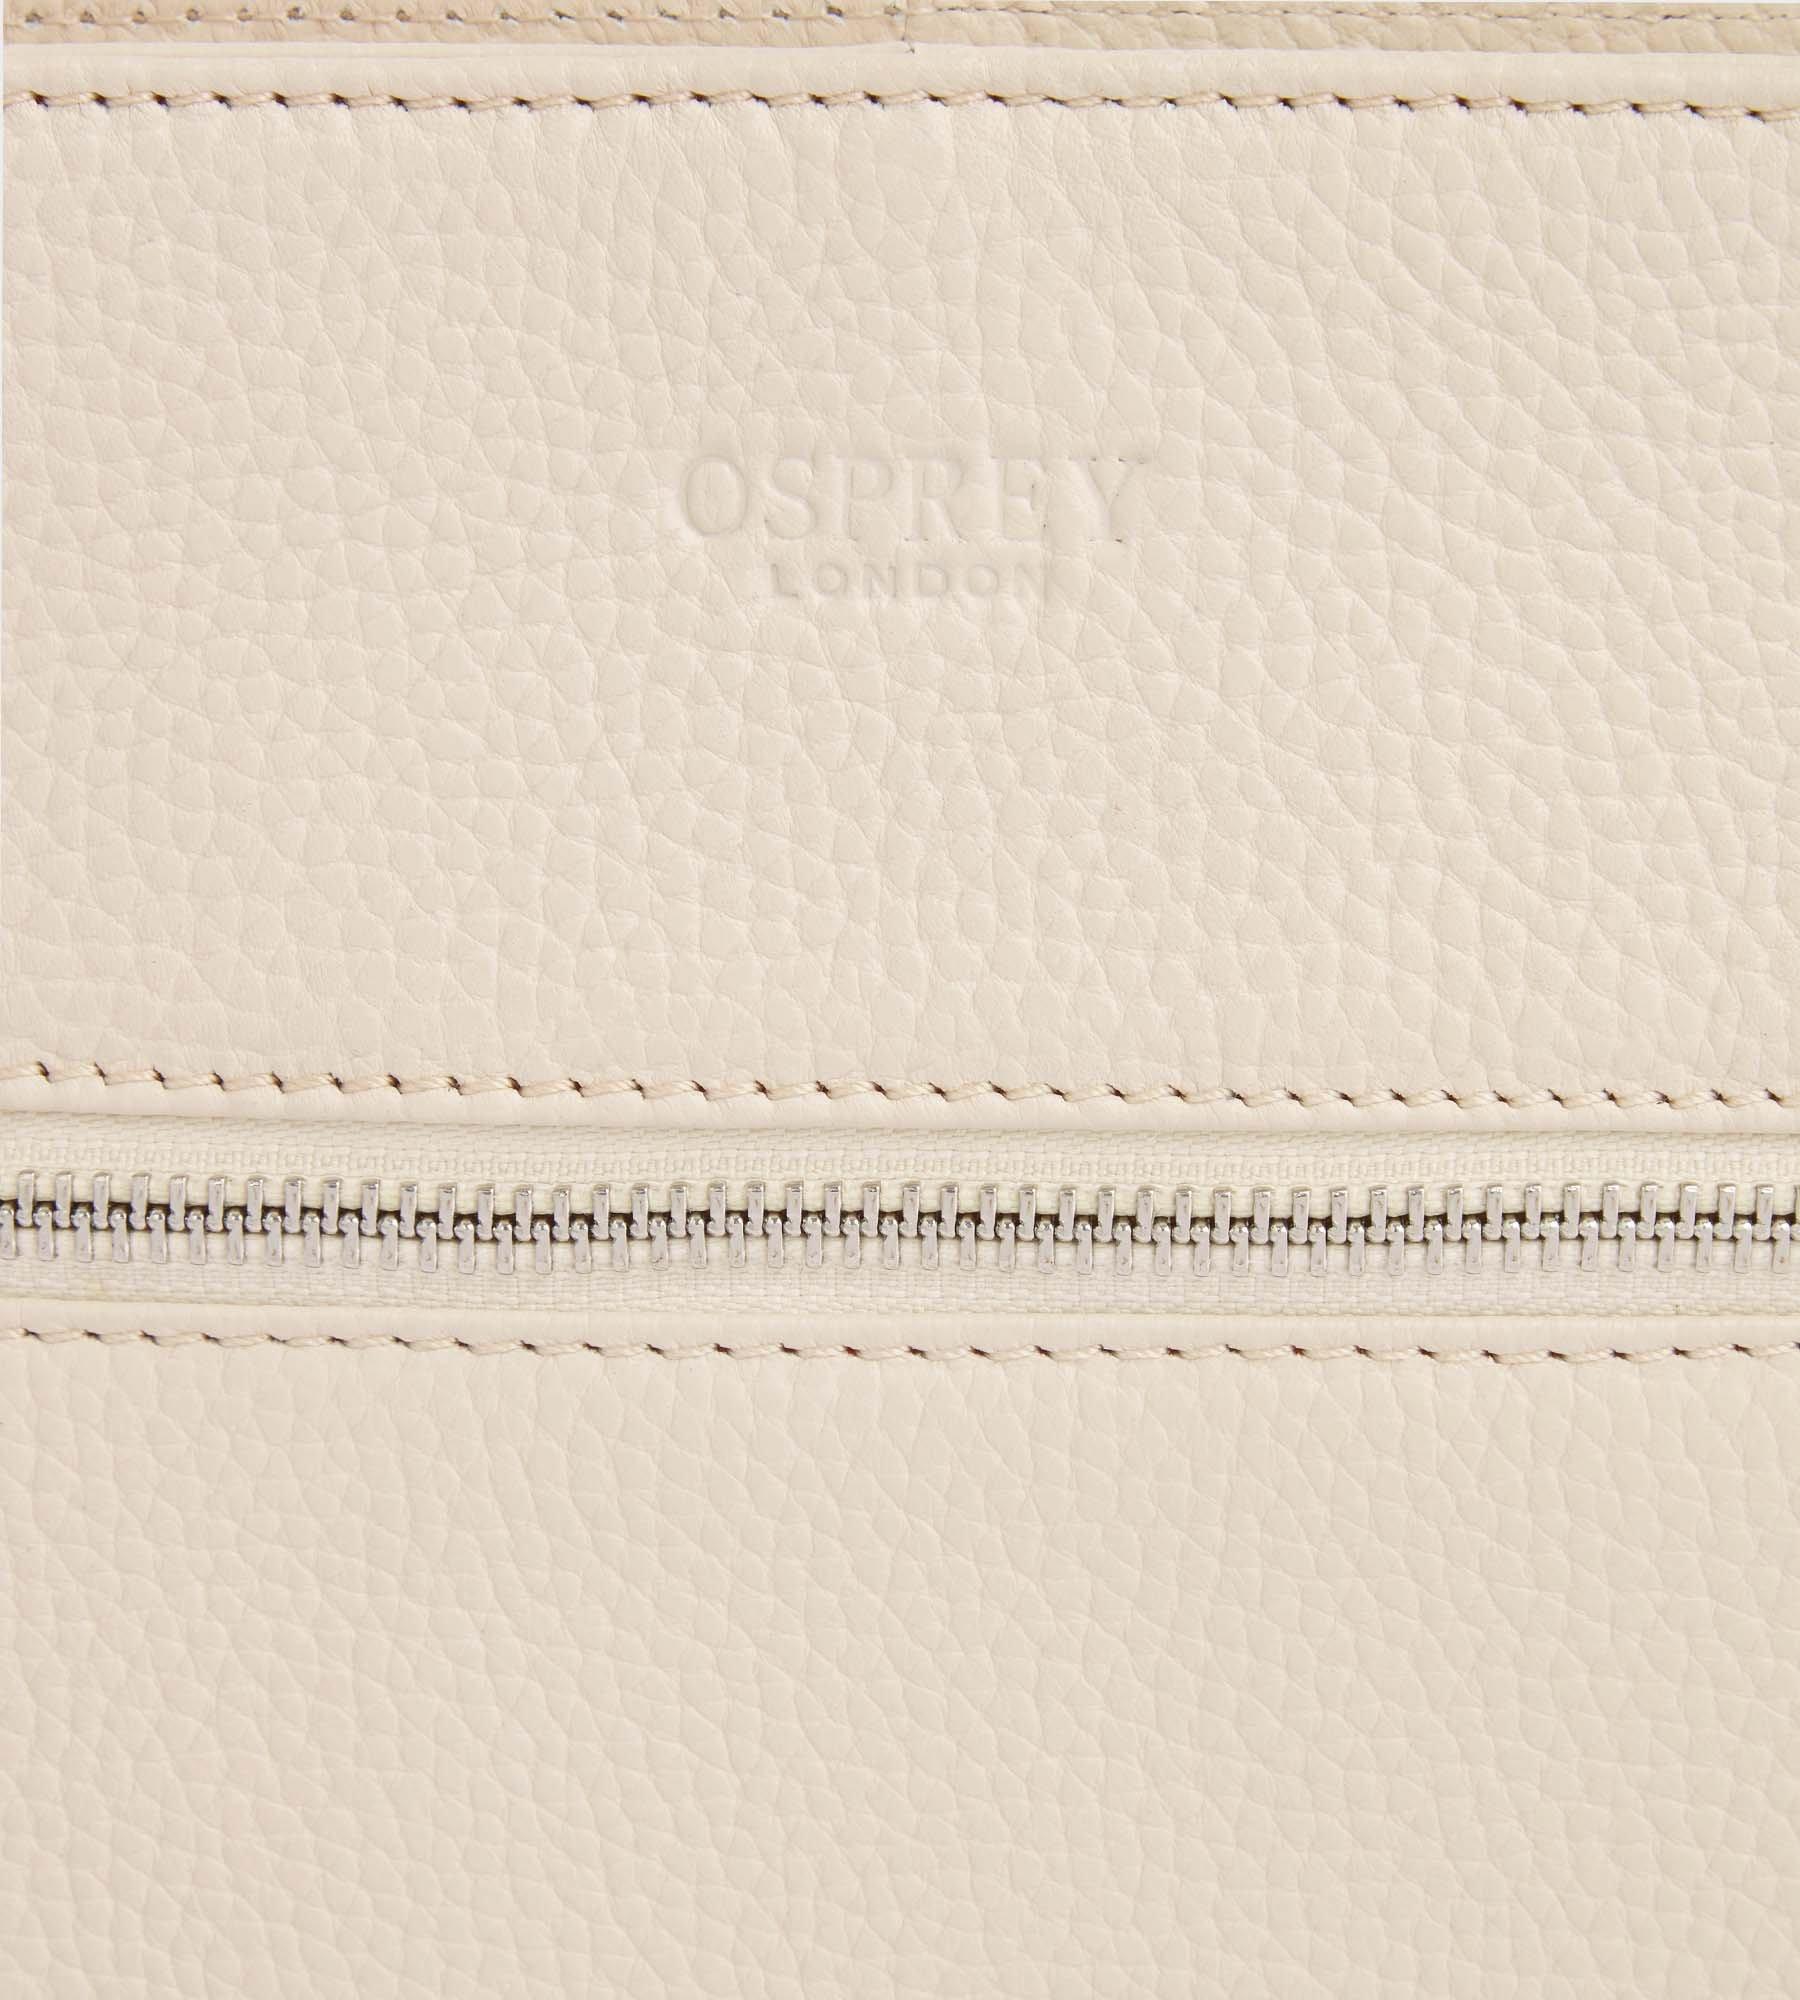 handbag, Osprey London | Bags, Osprey london, Handbag